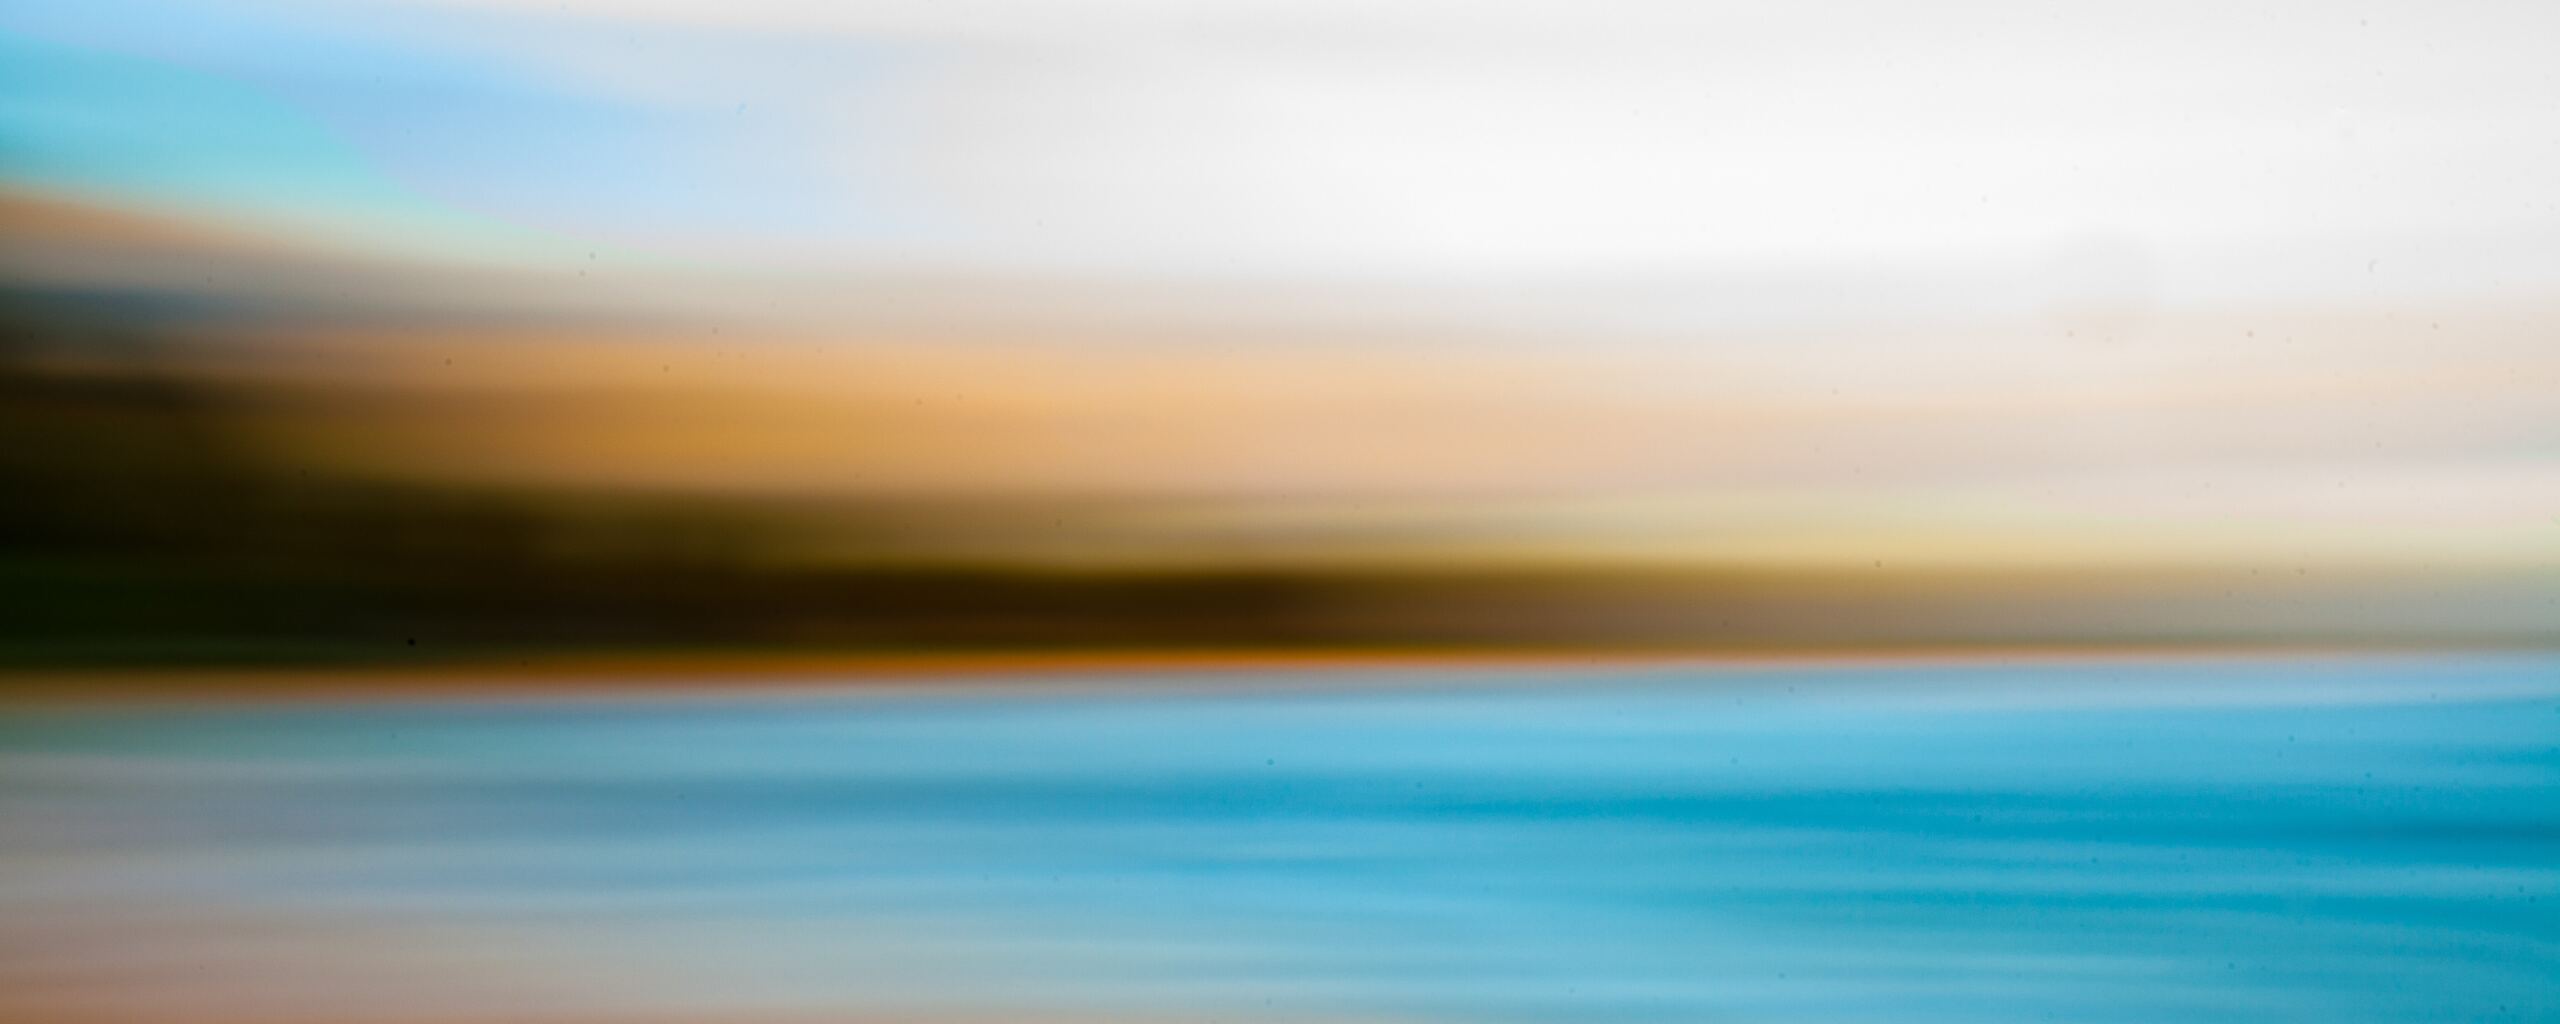 beach-abstract-5k-7c.jpg